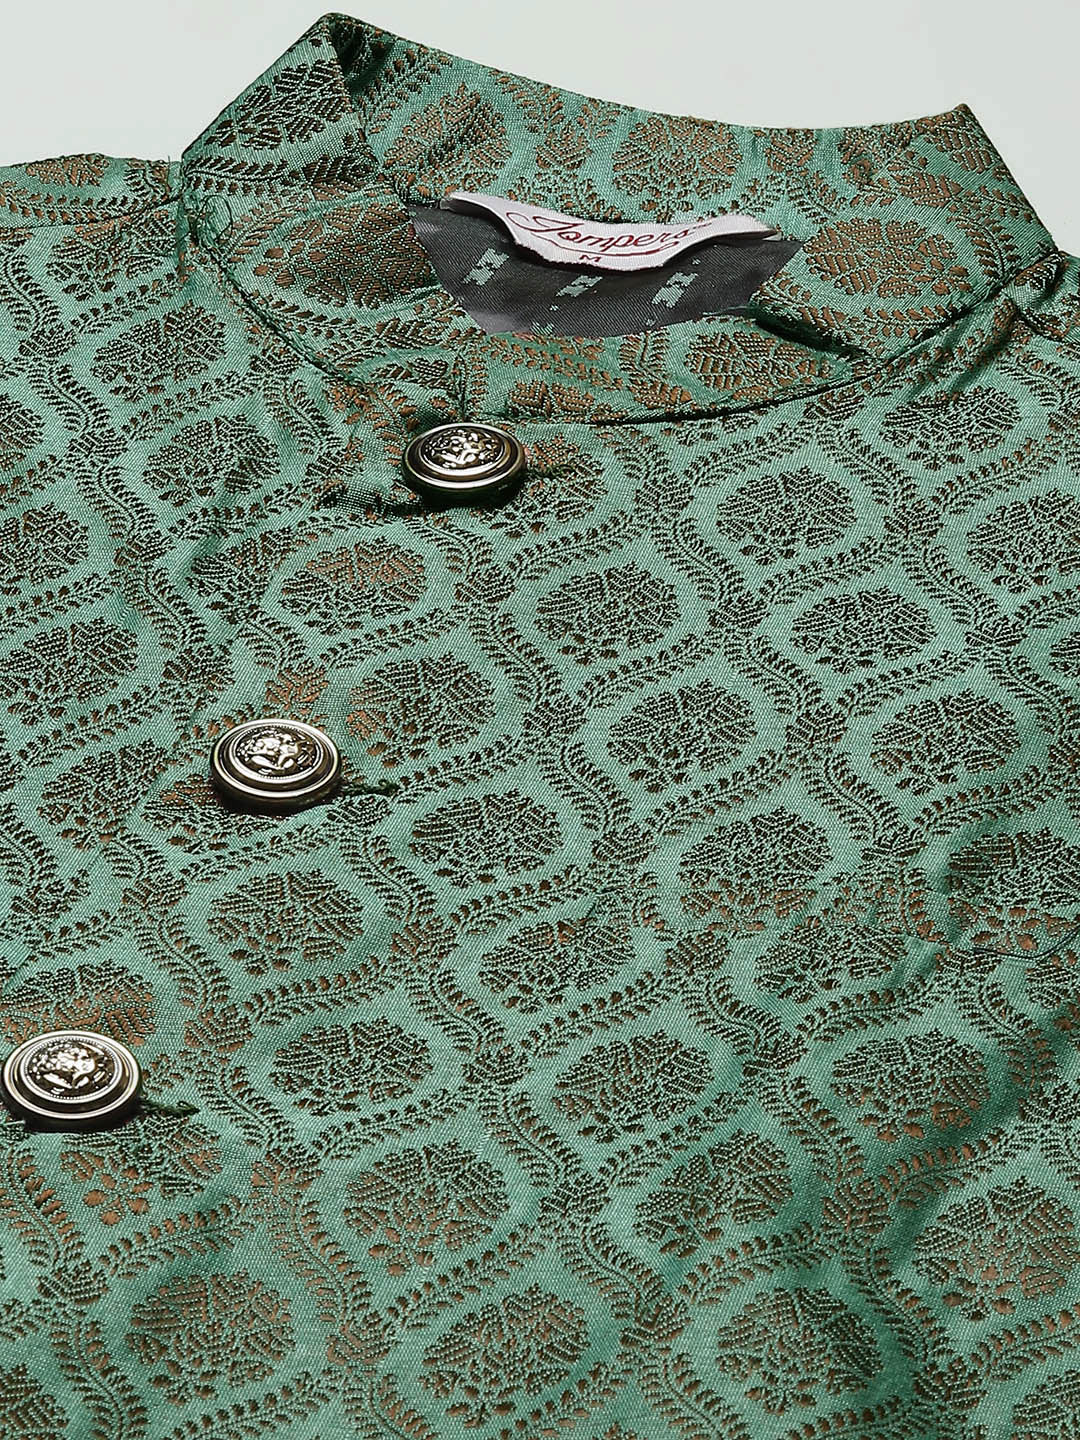 Jompers Men's Green Self-Designed Waistcoat ( JOWC 4028Green )